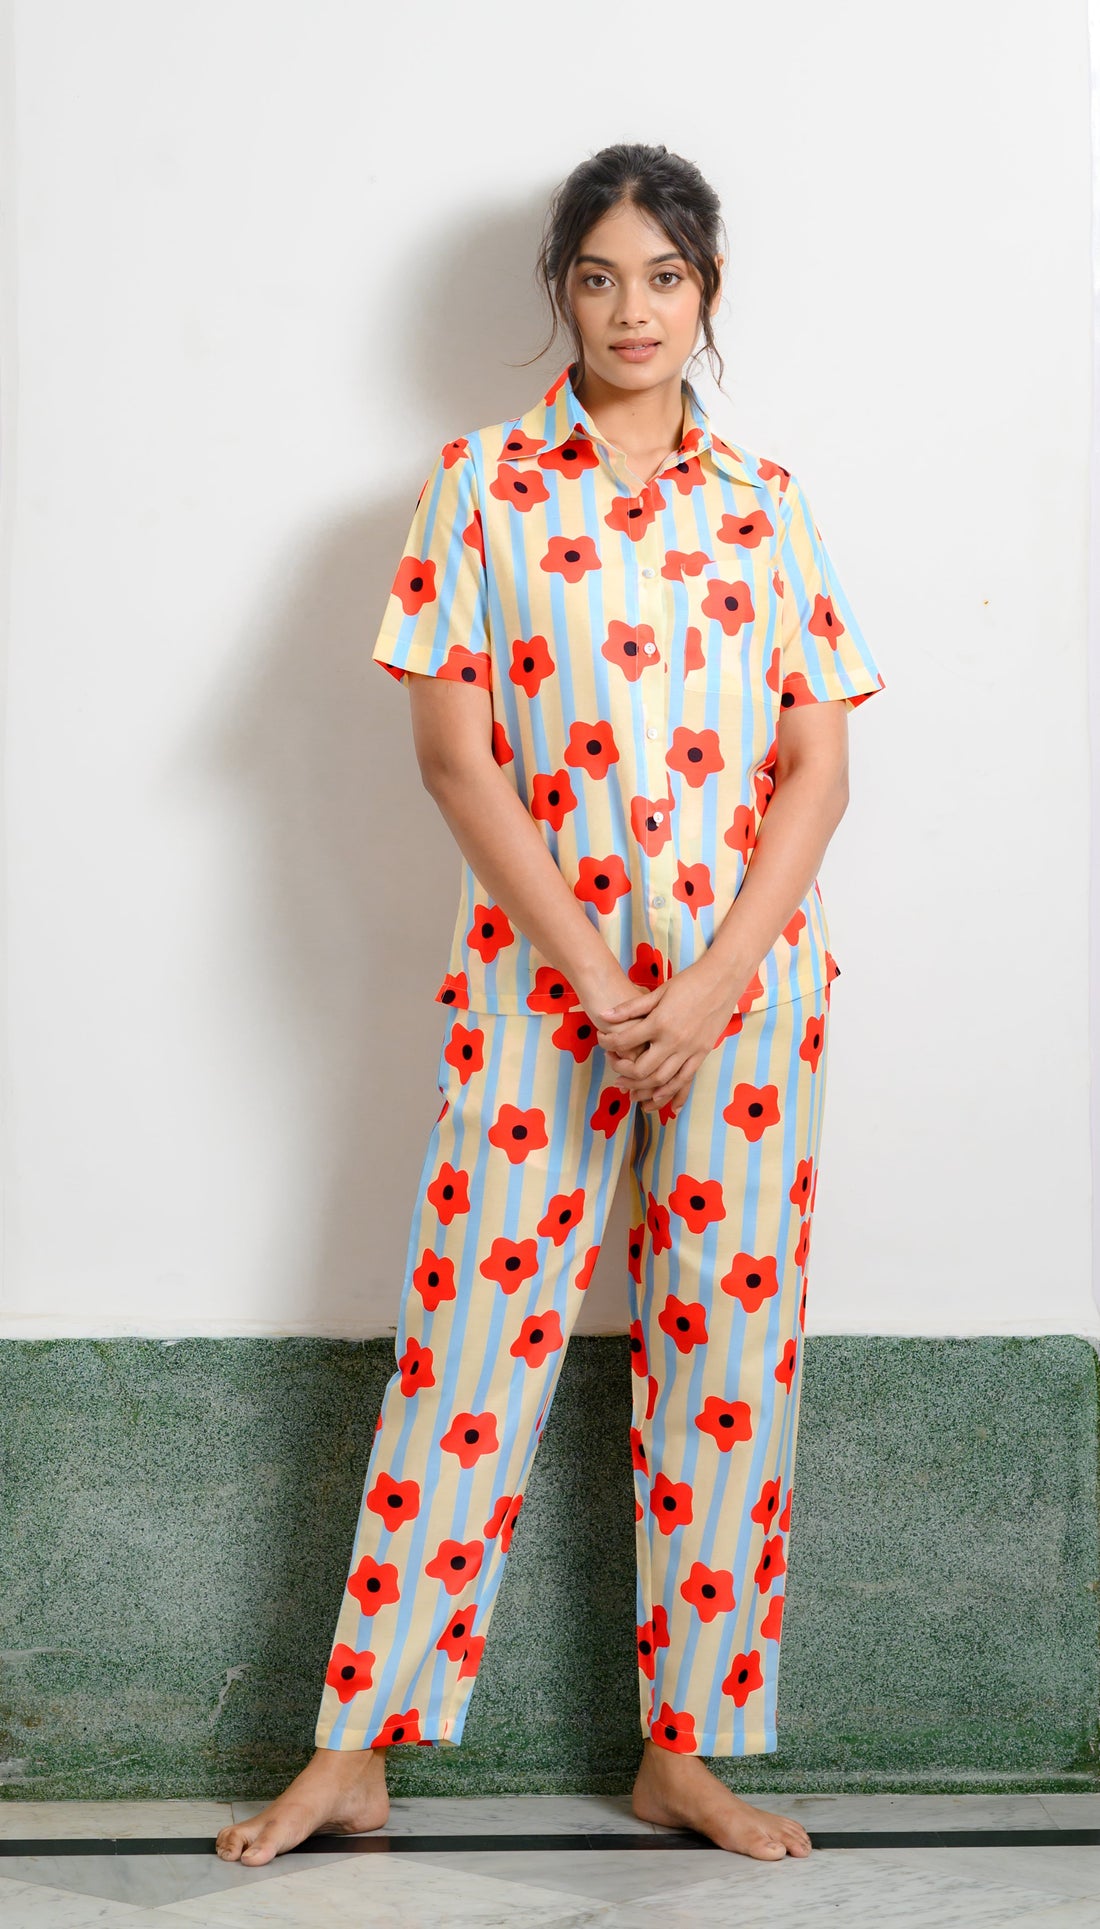 Floral Bliss: Pop Flower Print Pajama Set in Muslin Fabric